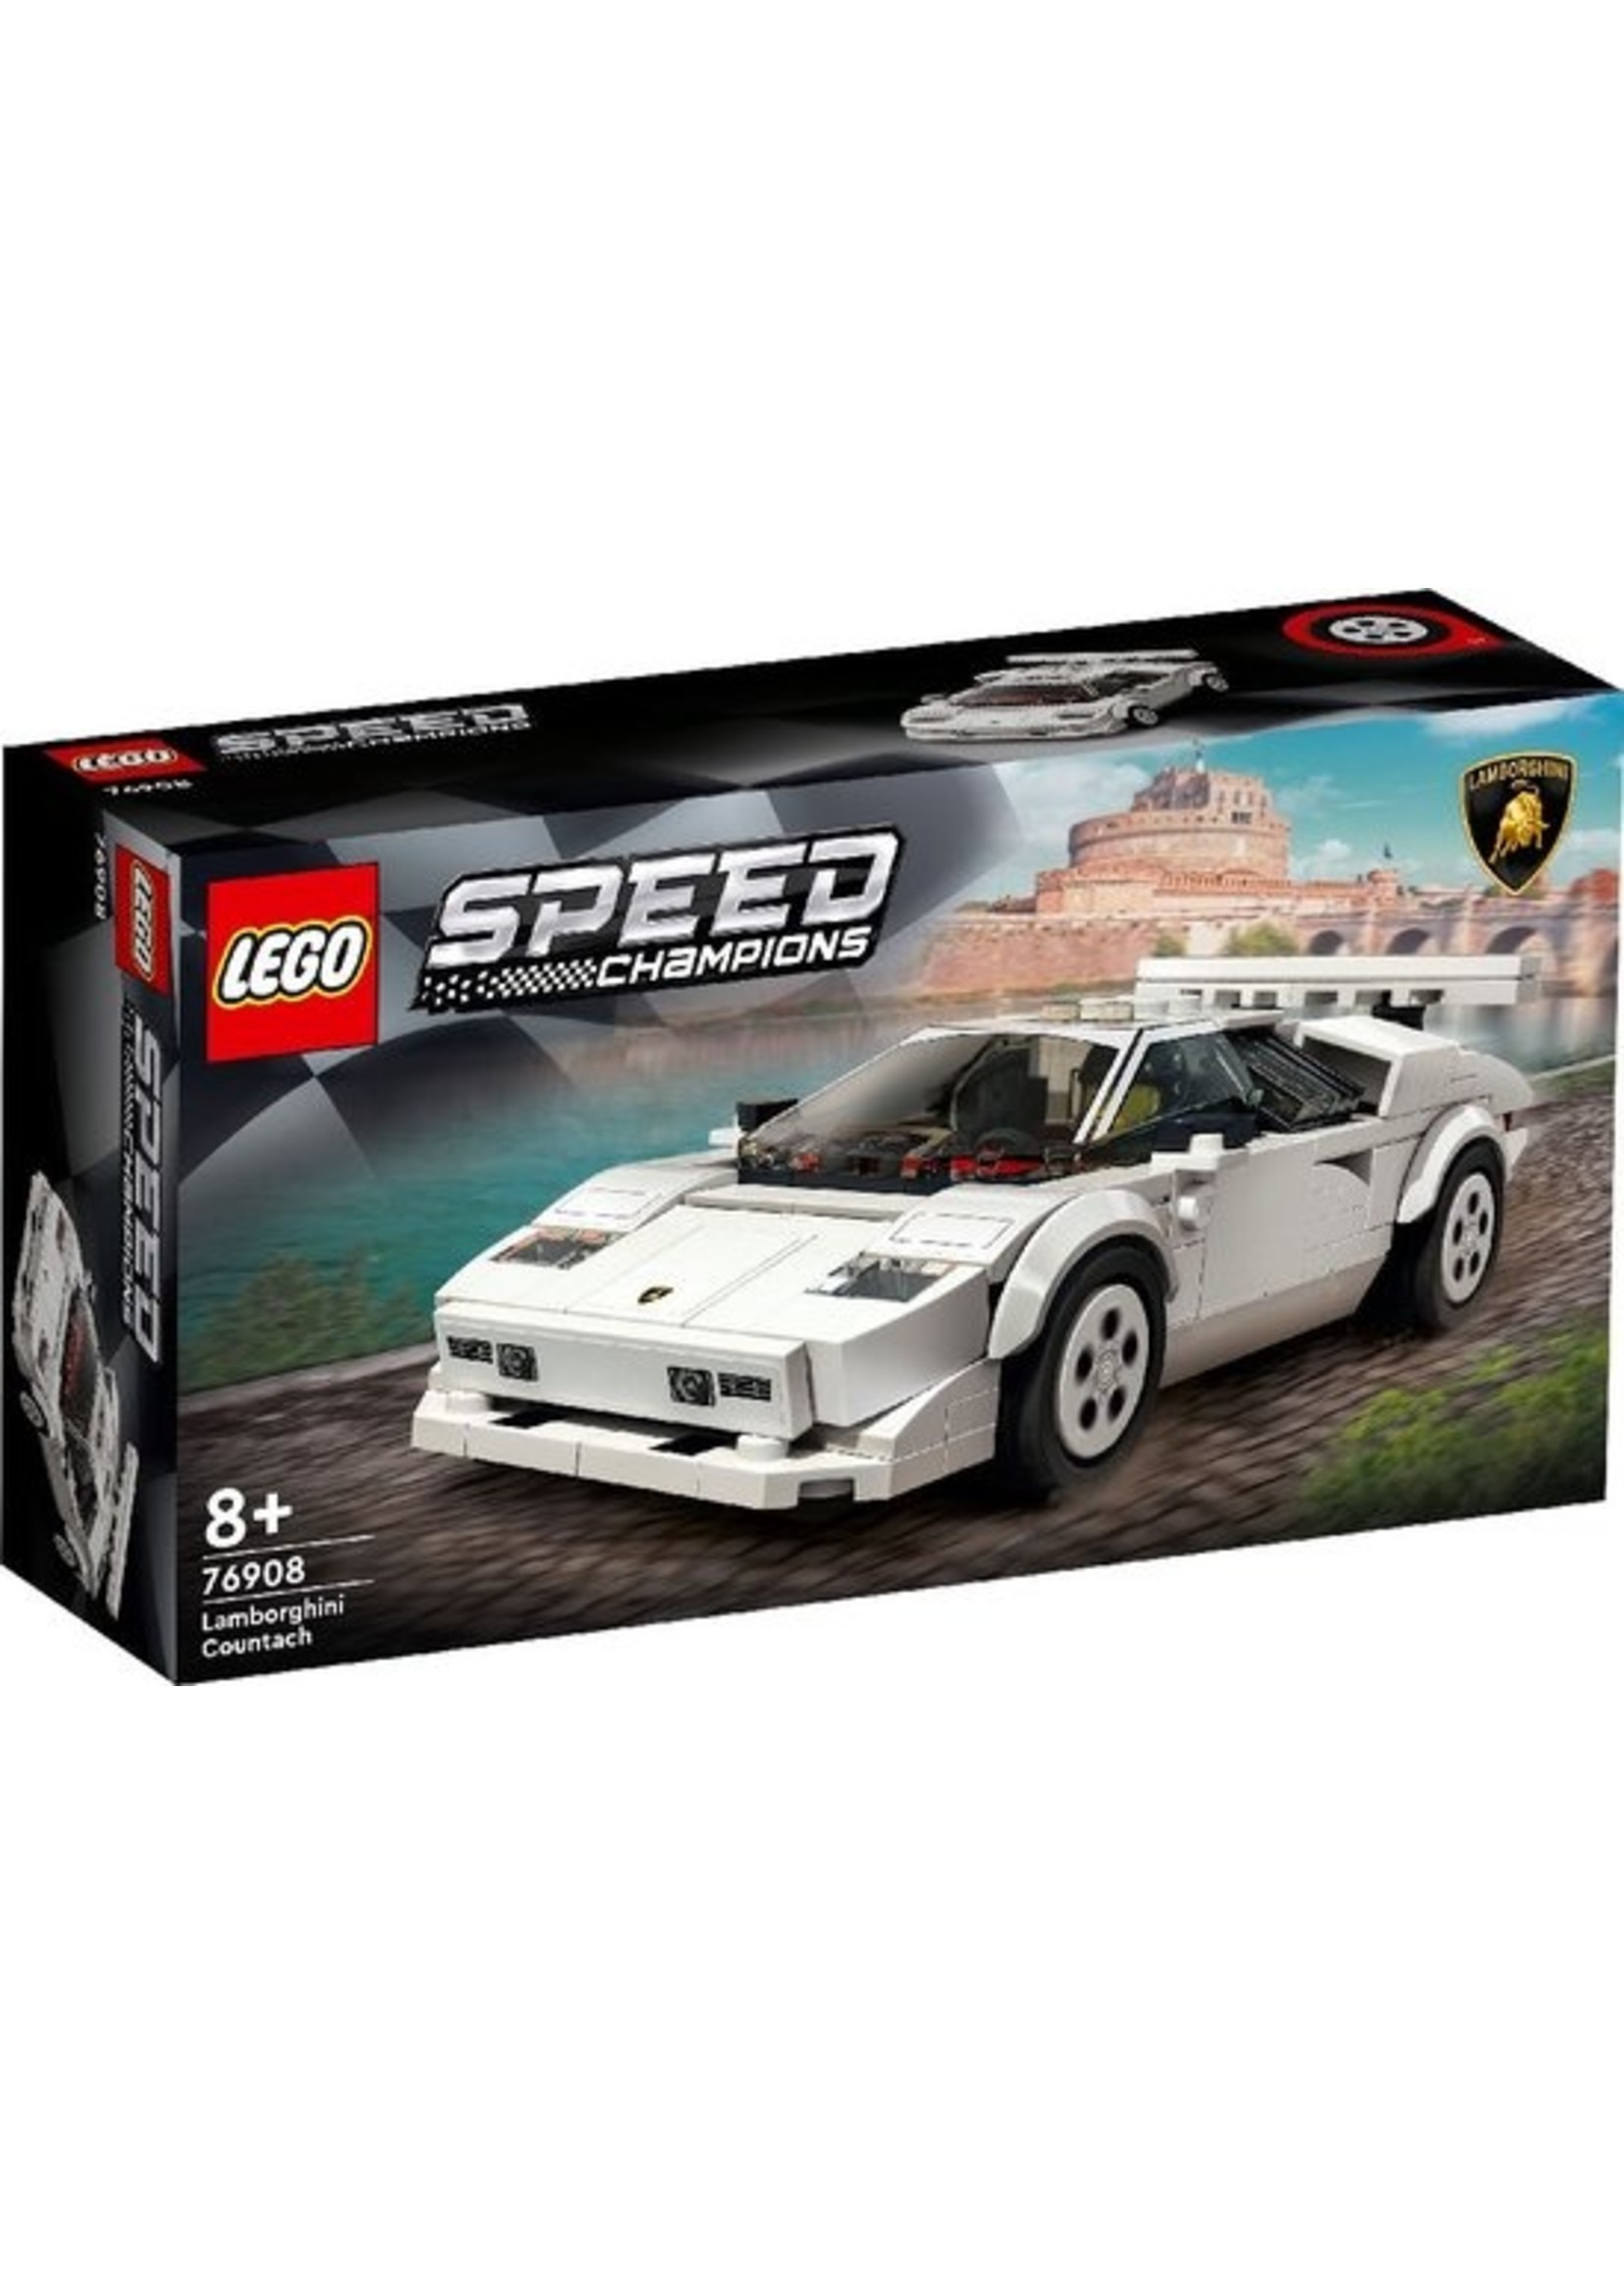 Lego LEGO Speed Champions Lamborghini Countach<br />
- 76908